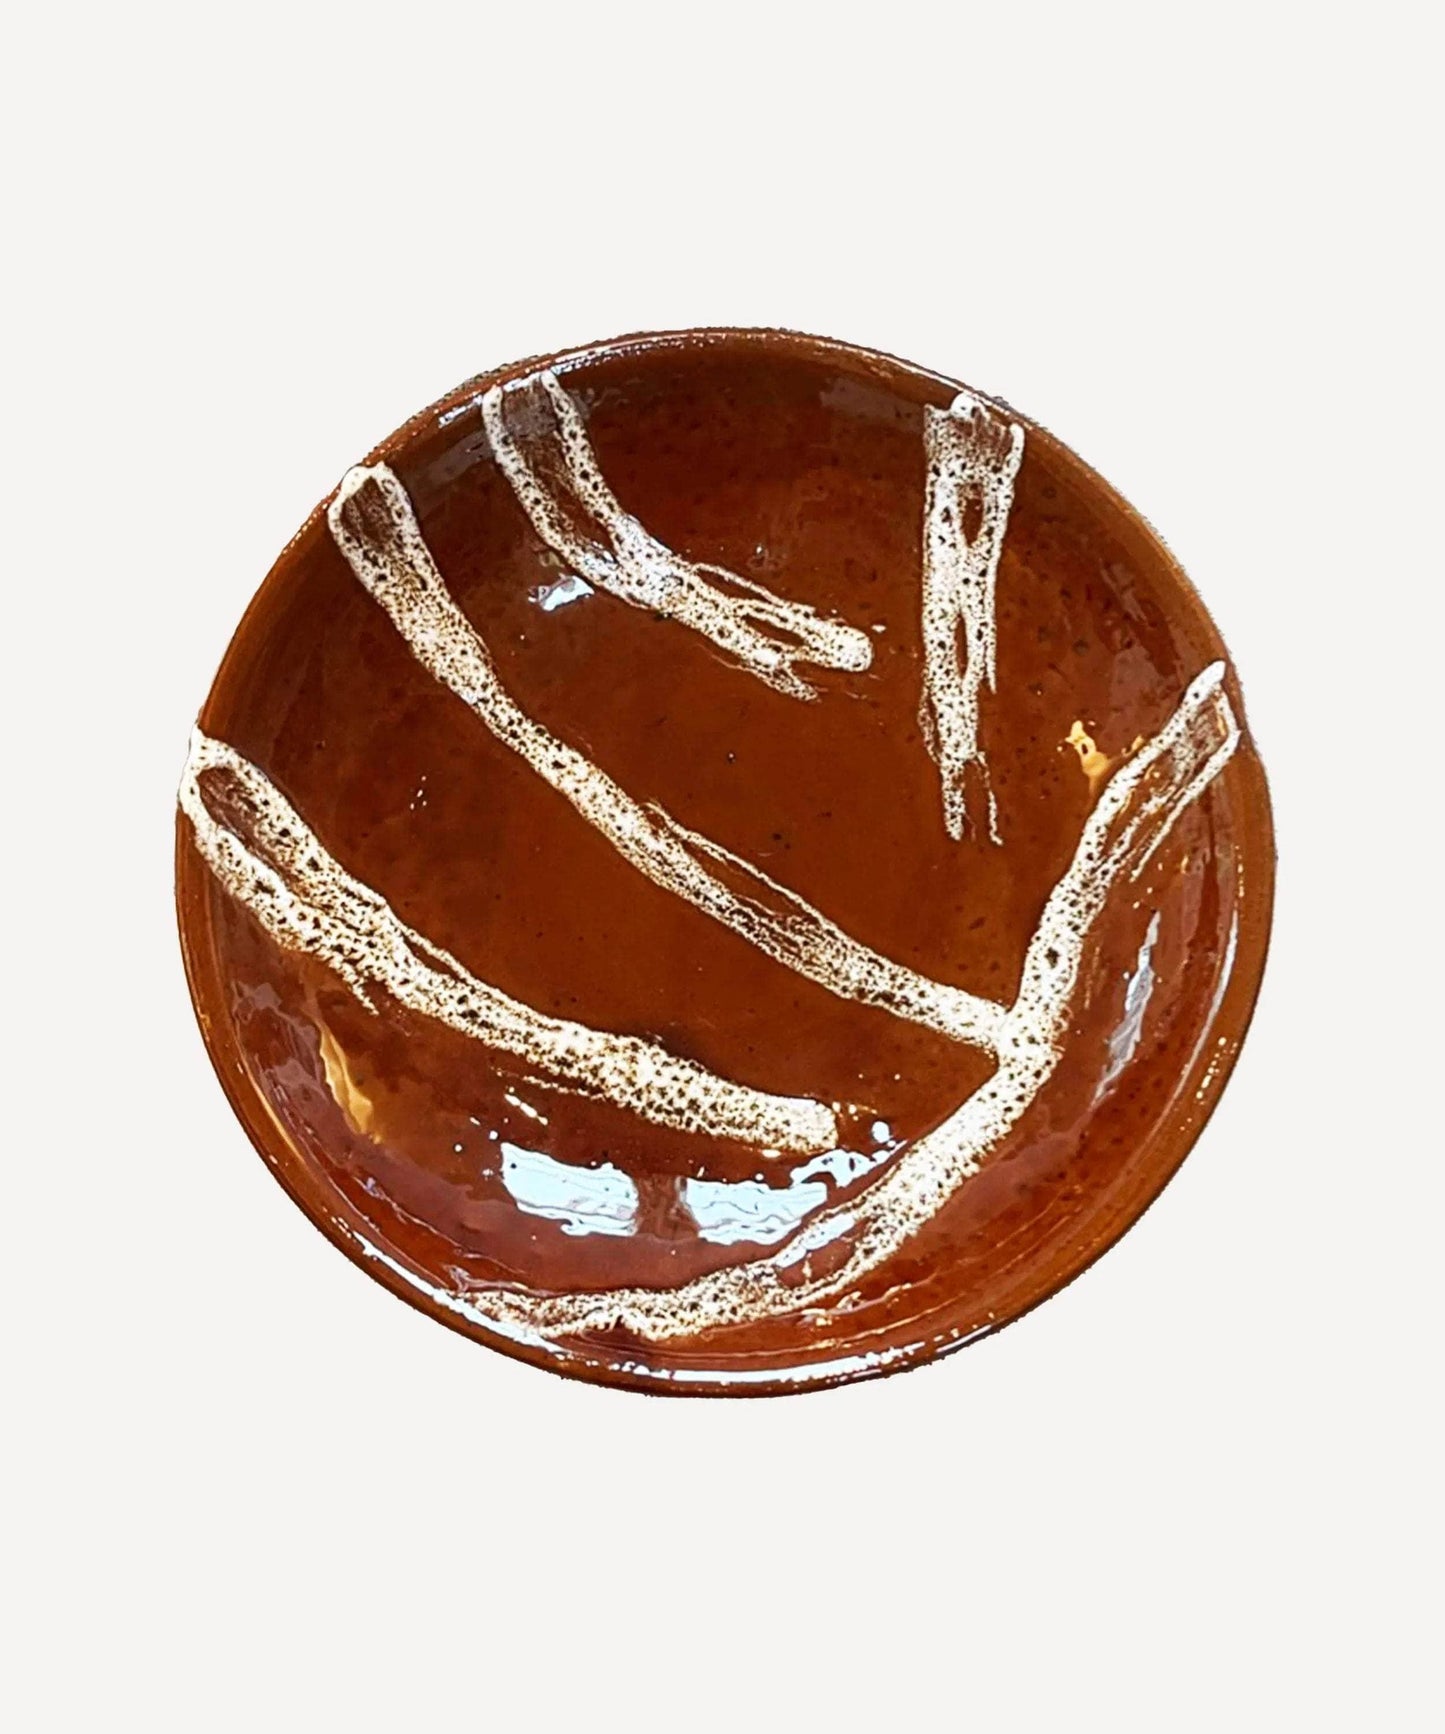 Pedestal Bowl - Terracotta